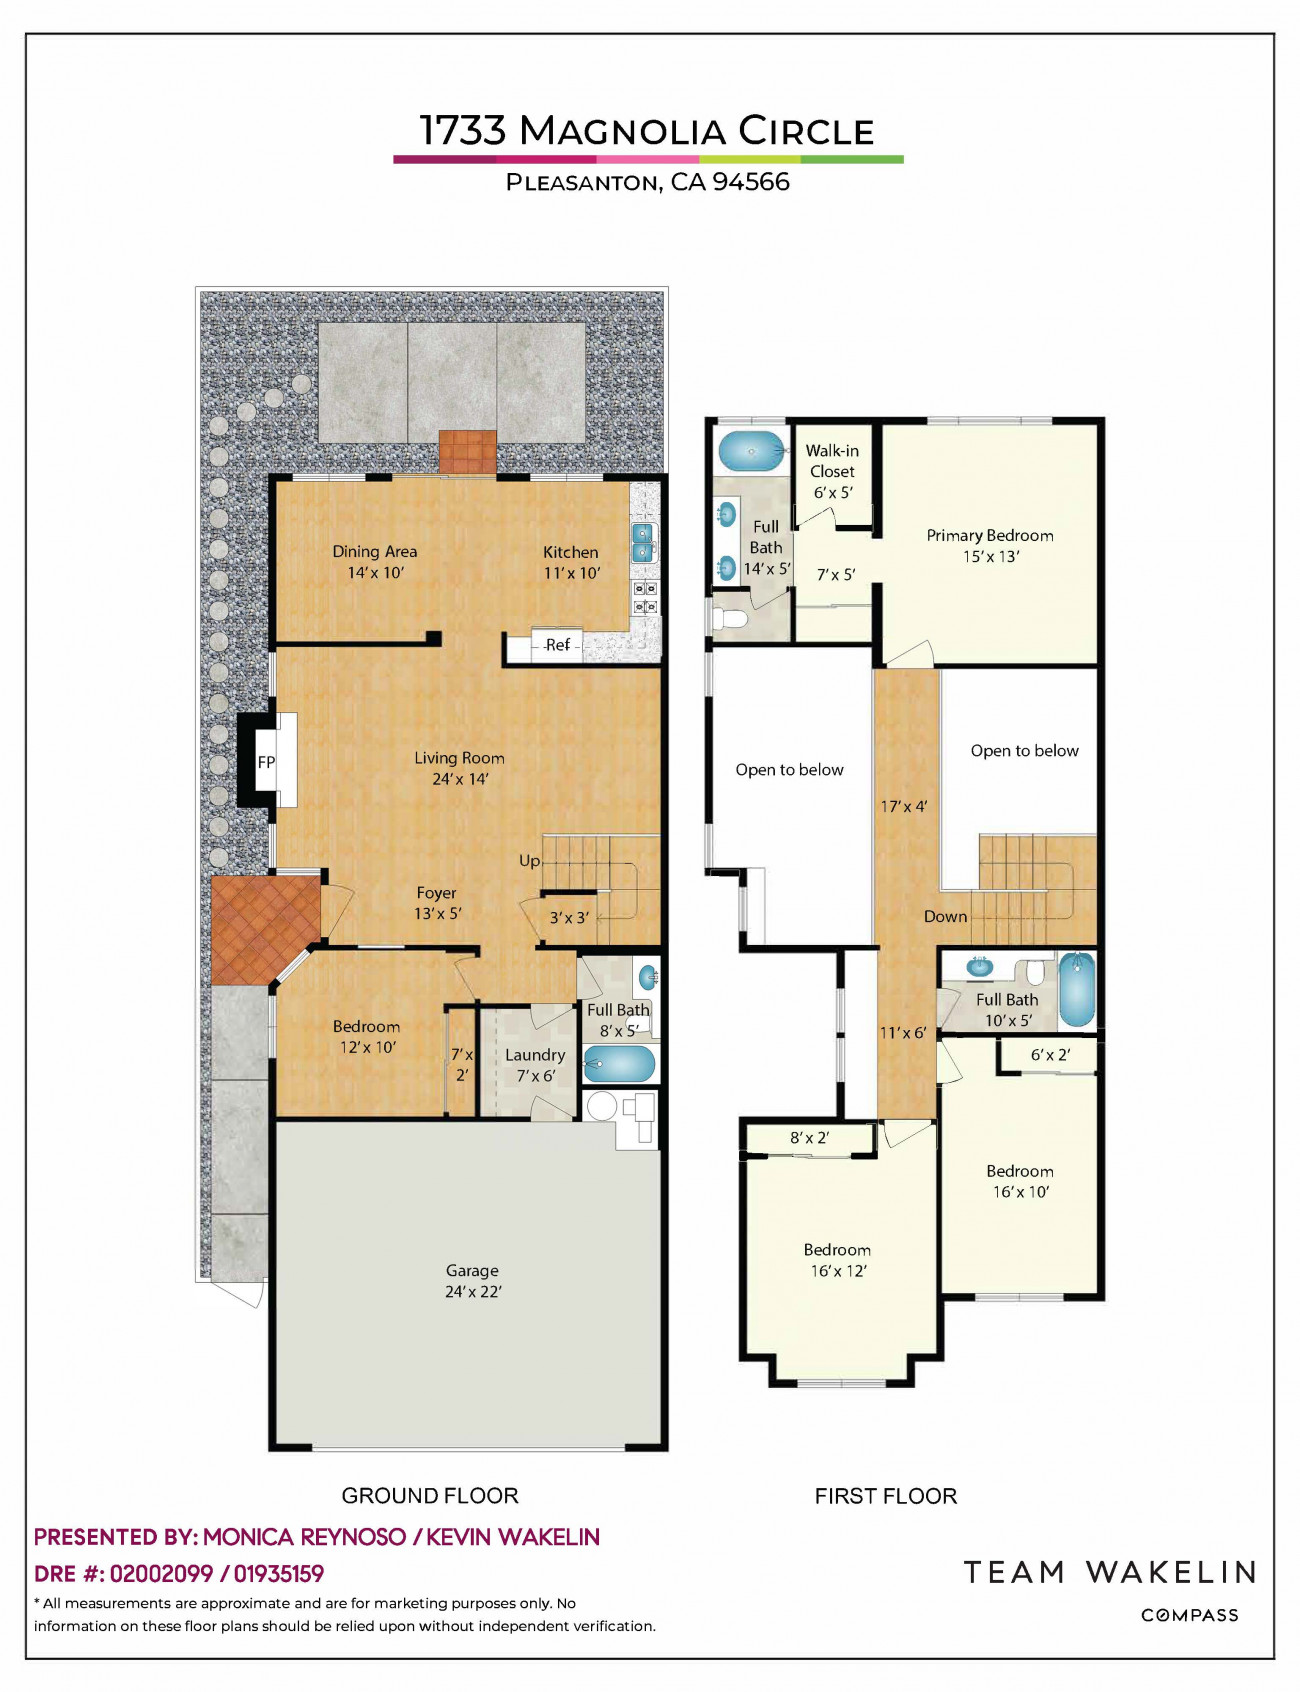 Floor Plan - personalized - 1733 Magnolia Cir.jpg